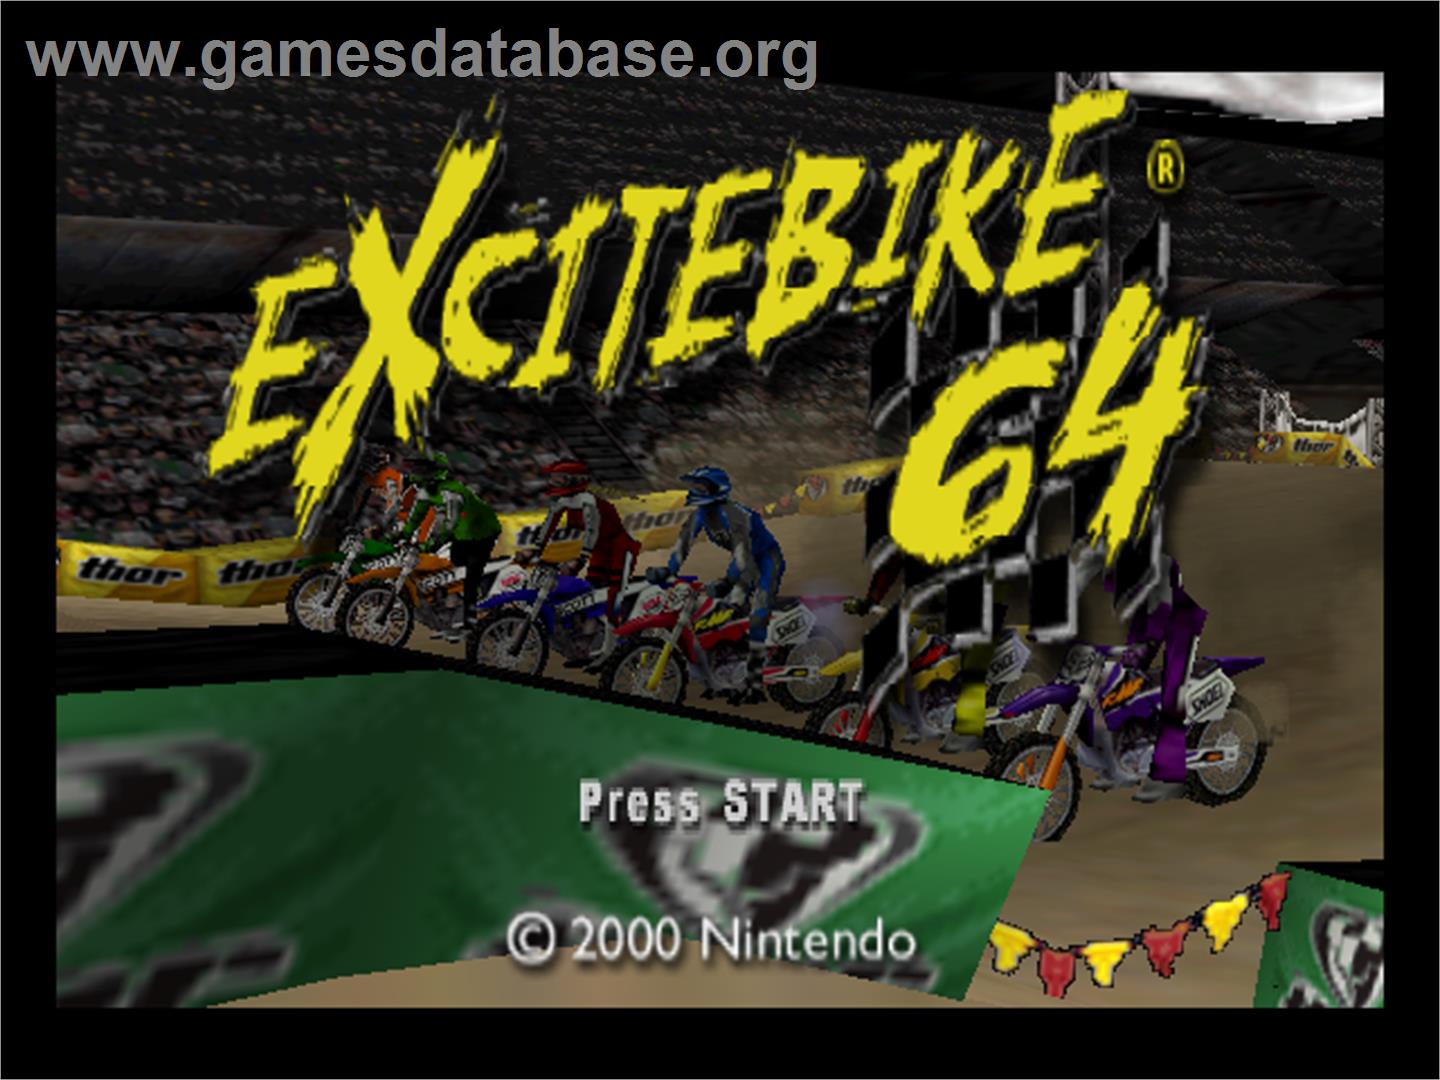 Excite Bike 64 - Nintendo N64 - Artwork - Title Screen